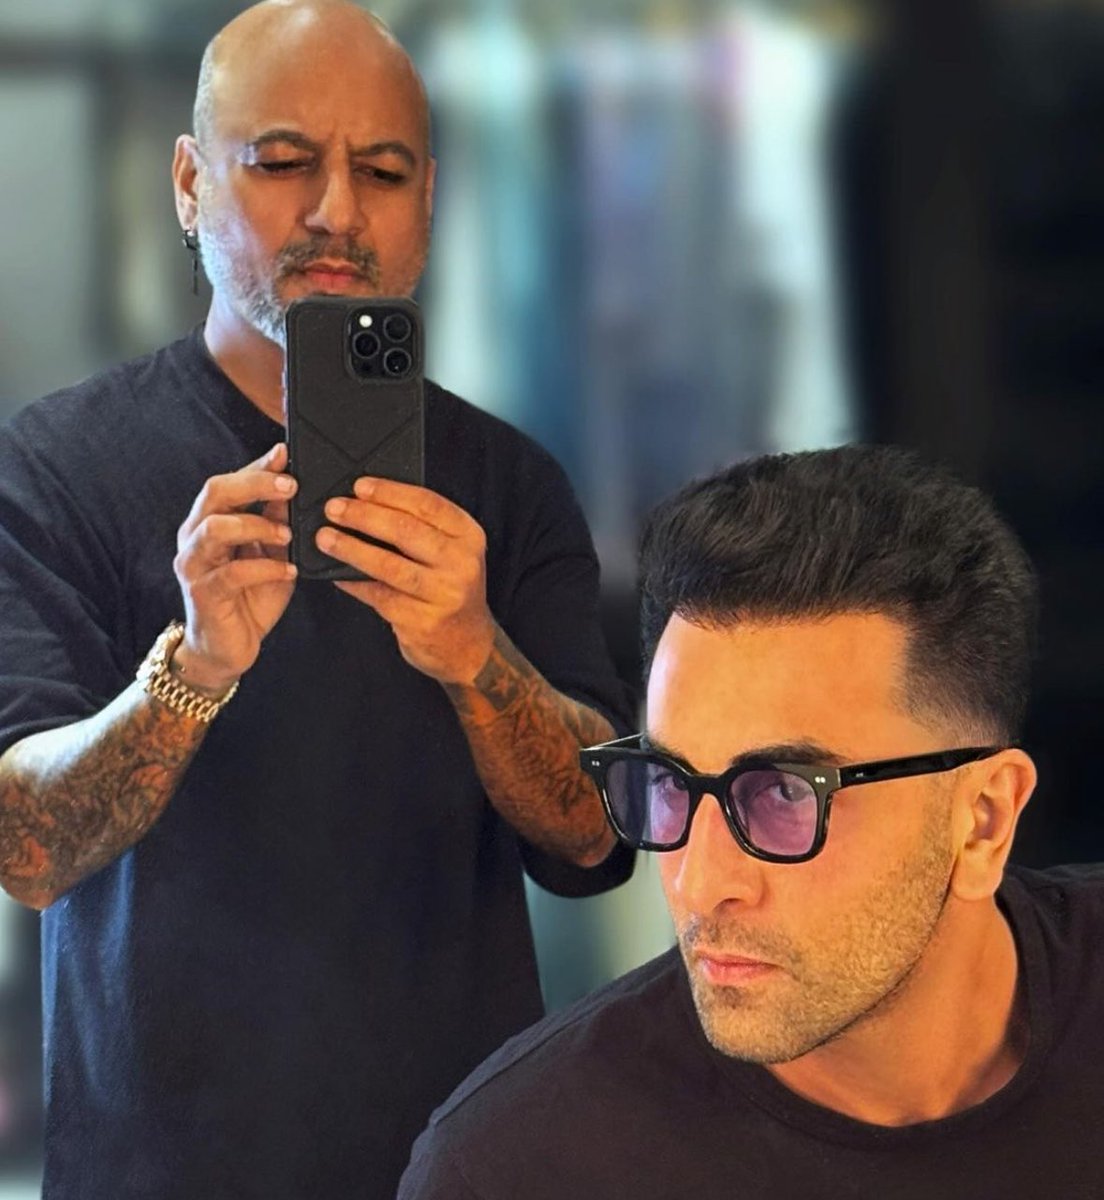 Look who’s got a new hair cut! #RanbirKapoor 😍 #RanbirKapoor #RanbirKapoorFans #RK #Animal #Bollywood